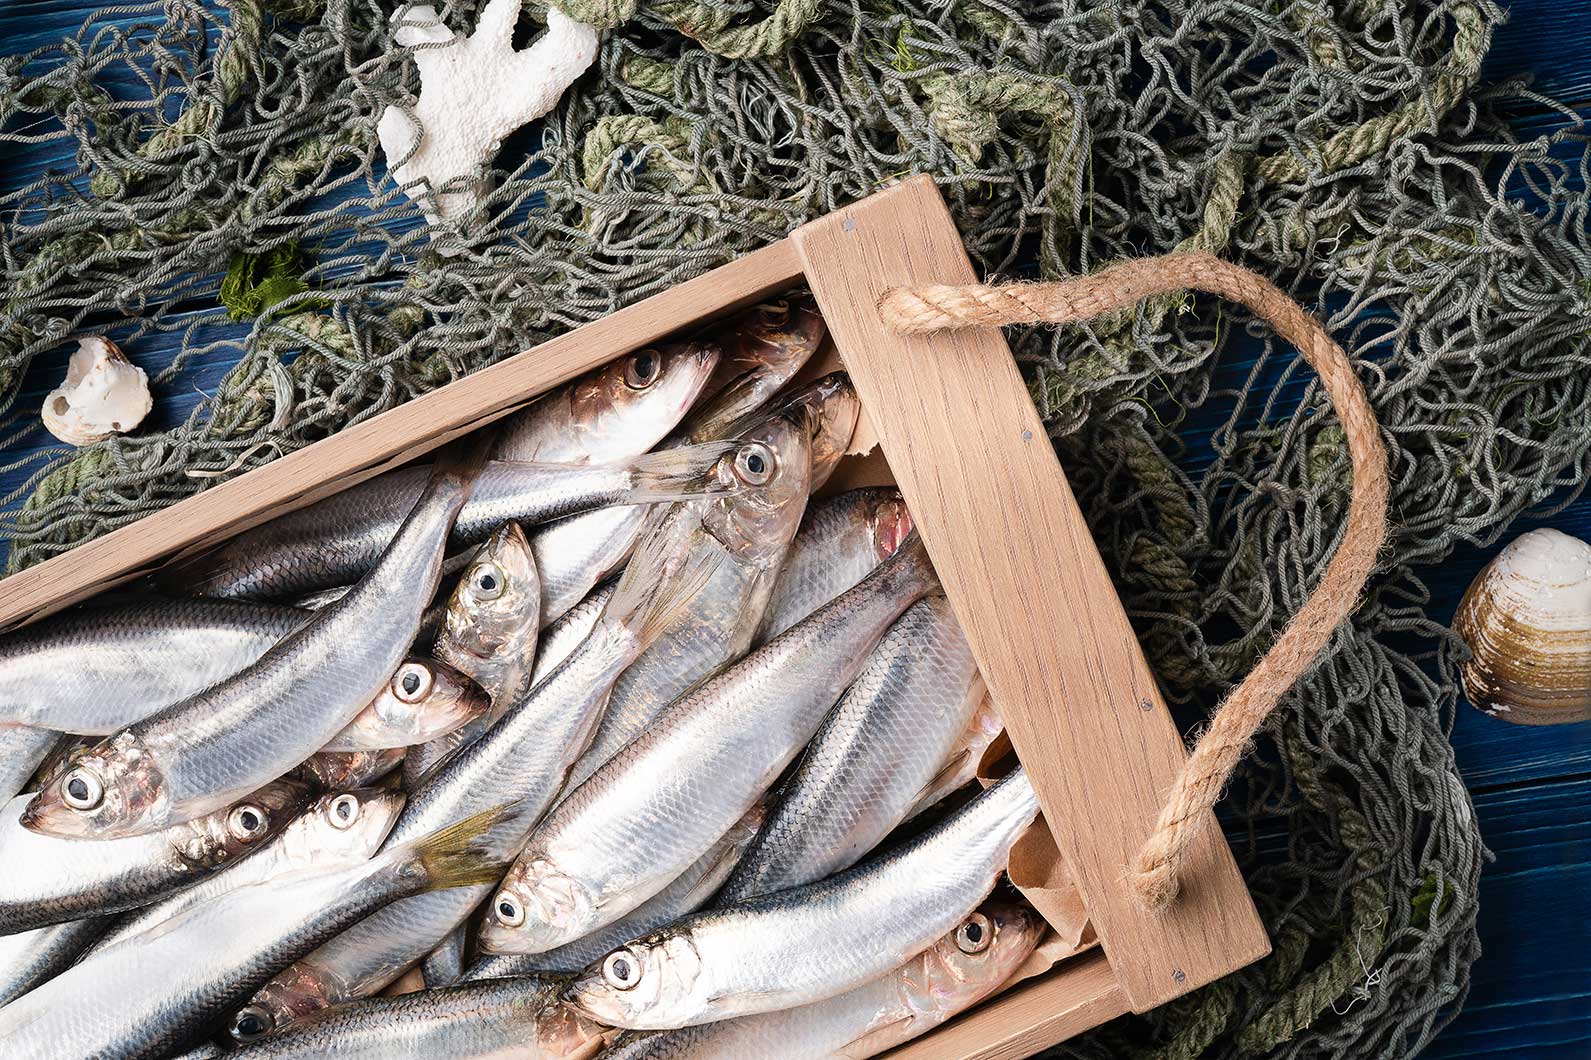 Салака фото и описание – каталог рыб, смотреть онлайн